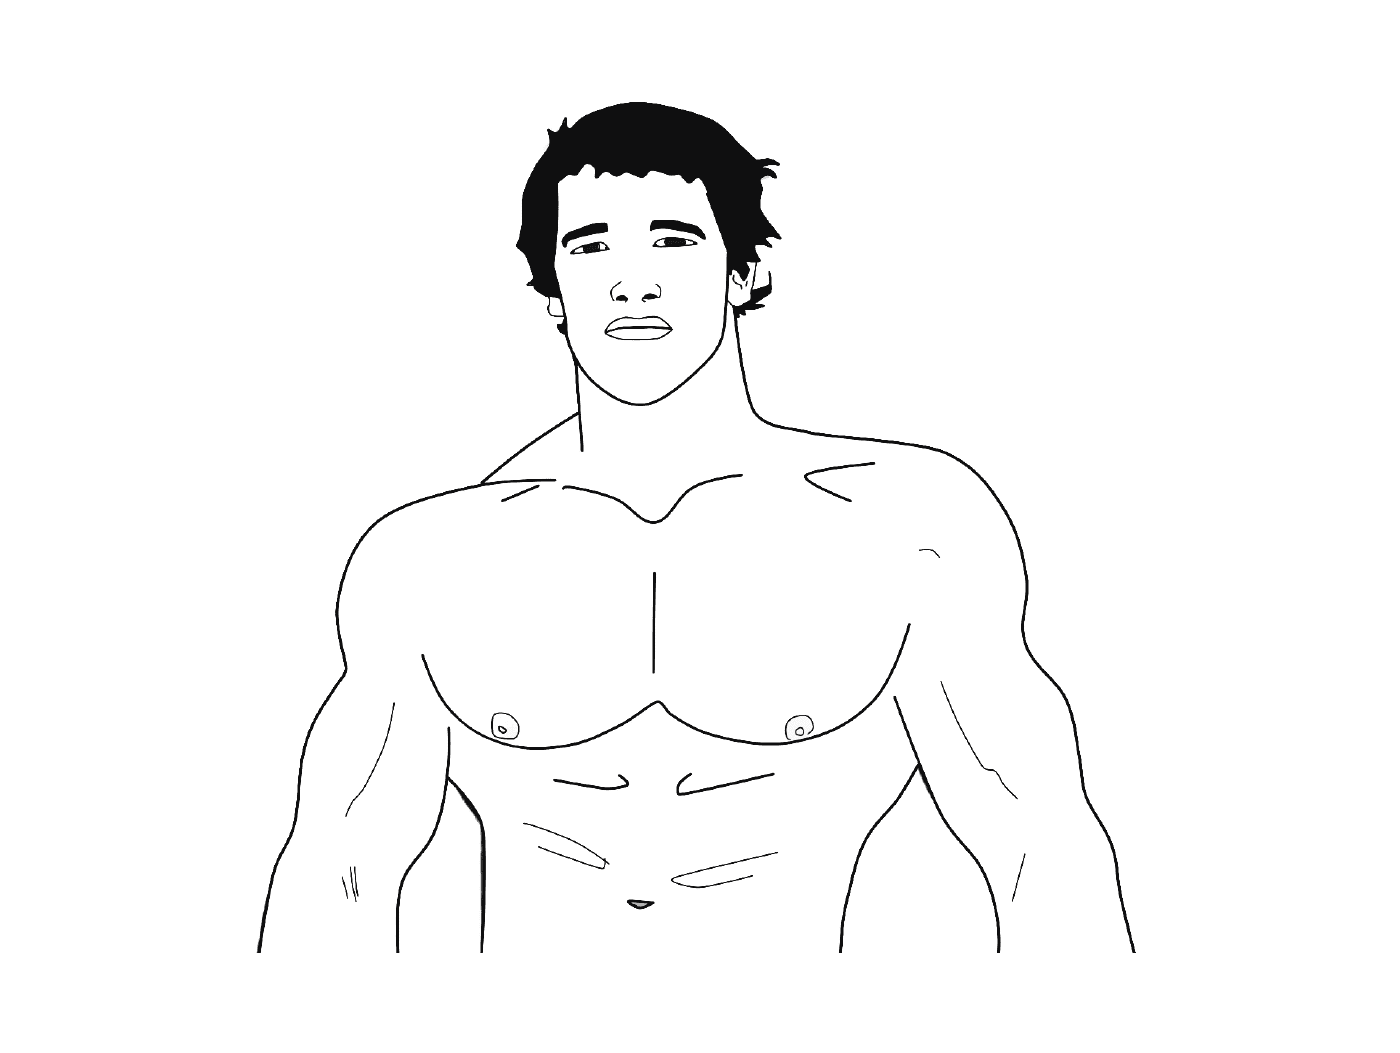  Um homem sem camisa 